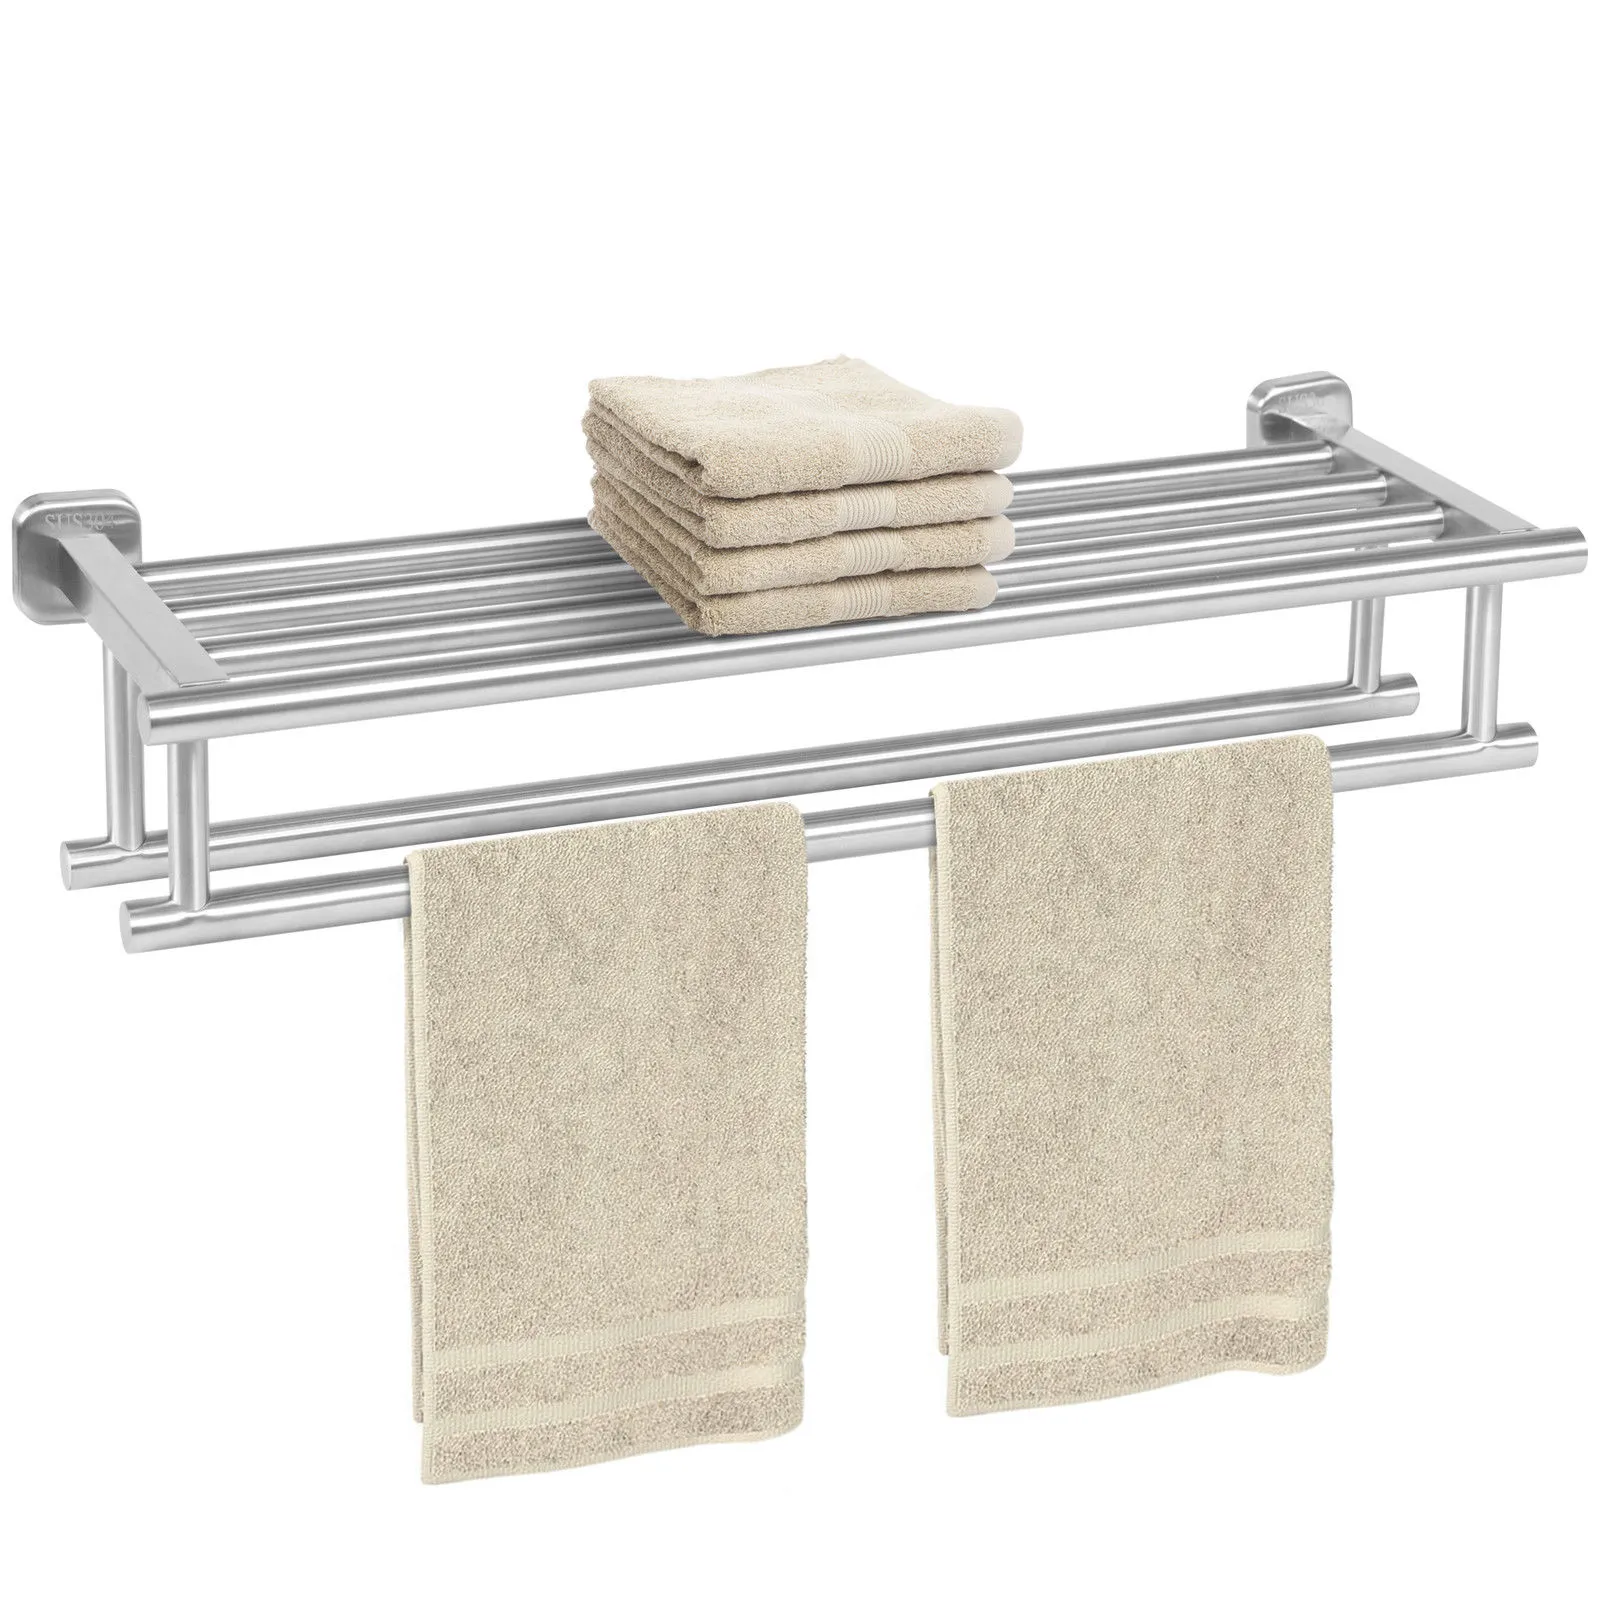 Stainless Steel Double Towel Rack Wall Mount Bathroom Shelf Bar Rail Hotel Style